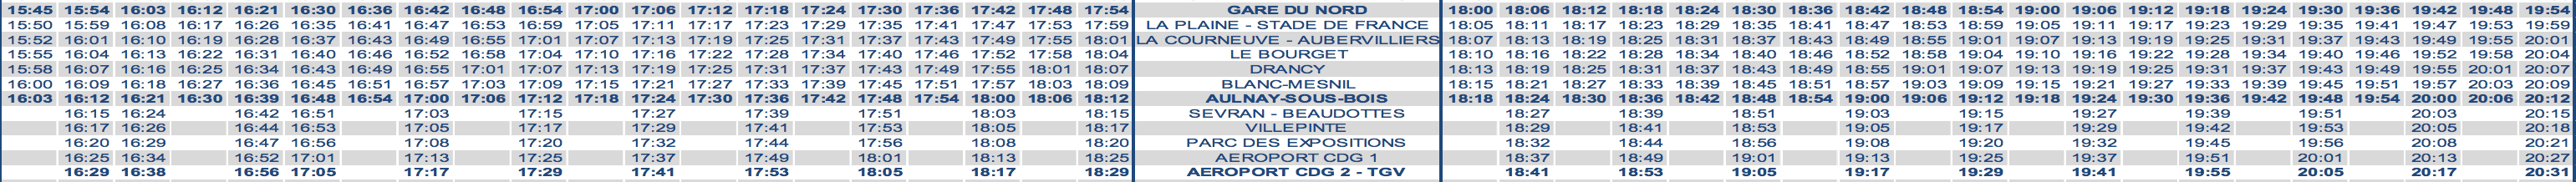 RER B Train Timetable Paris to CDG Afternoon Weekend 2020 Strike